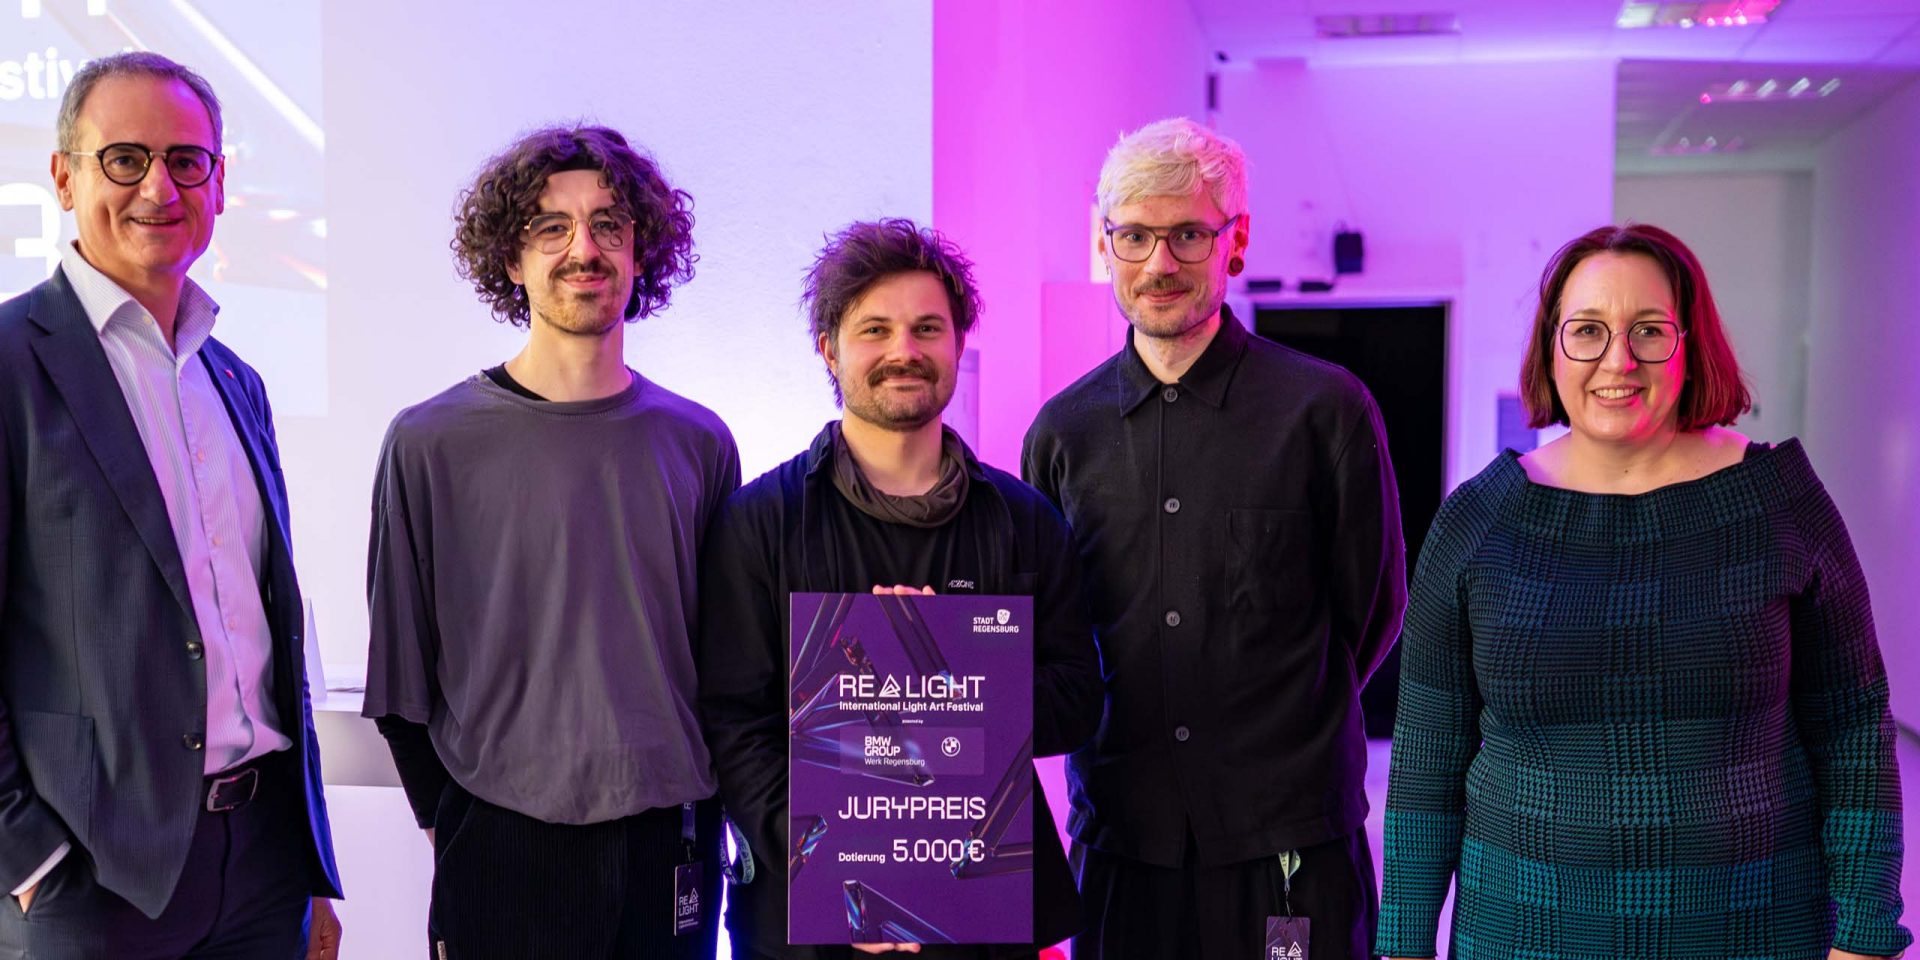 Lichtkunstfestival RE.LIGHT: Jurypreis der BMW Group geht an Nürnberger Künstlerkollektiv Matthias Franz, Manuel Schiller und Henrik Stelter